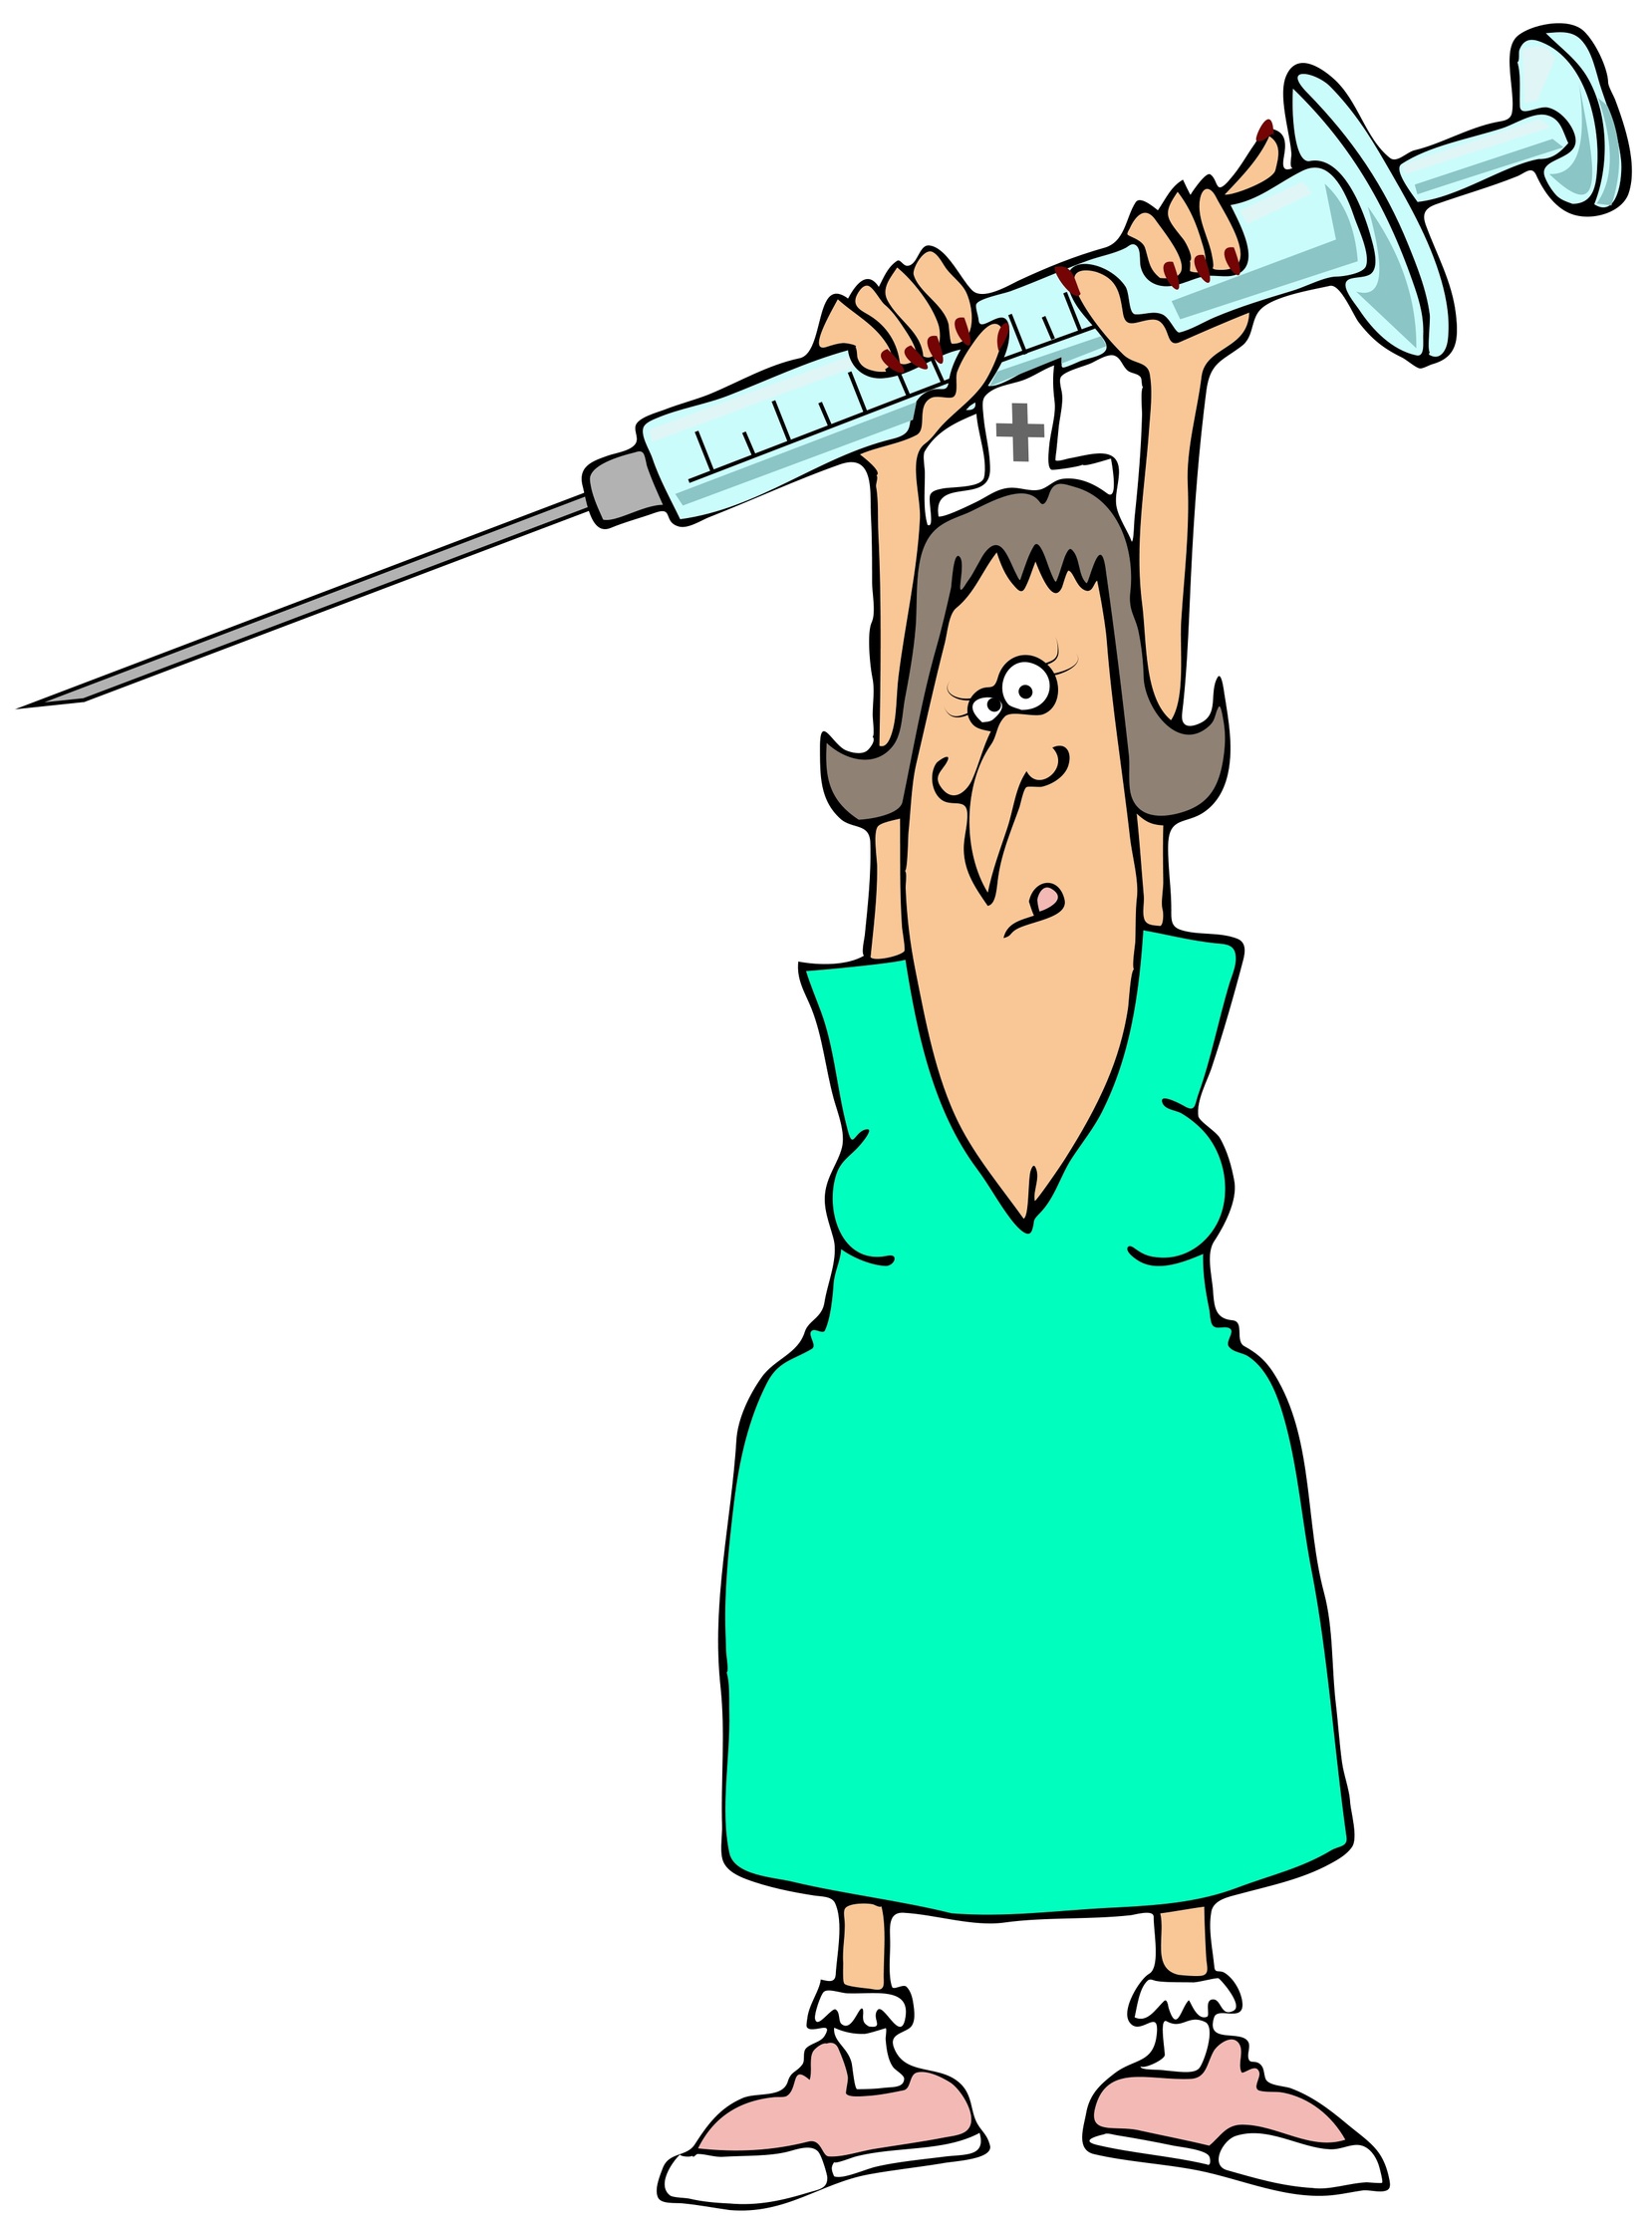 Nurse Cartoon Images - Cliparts.co